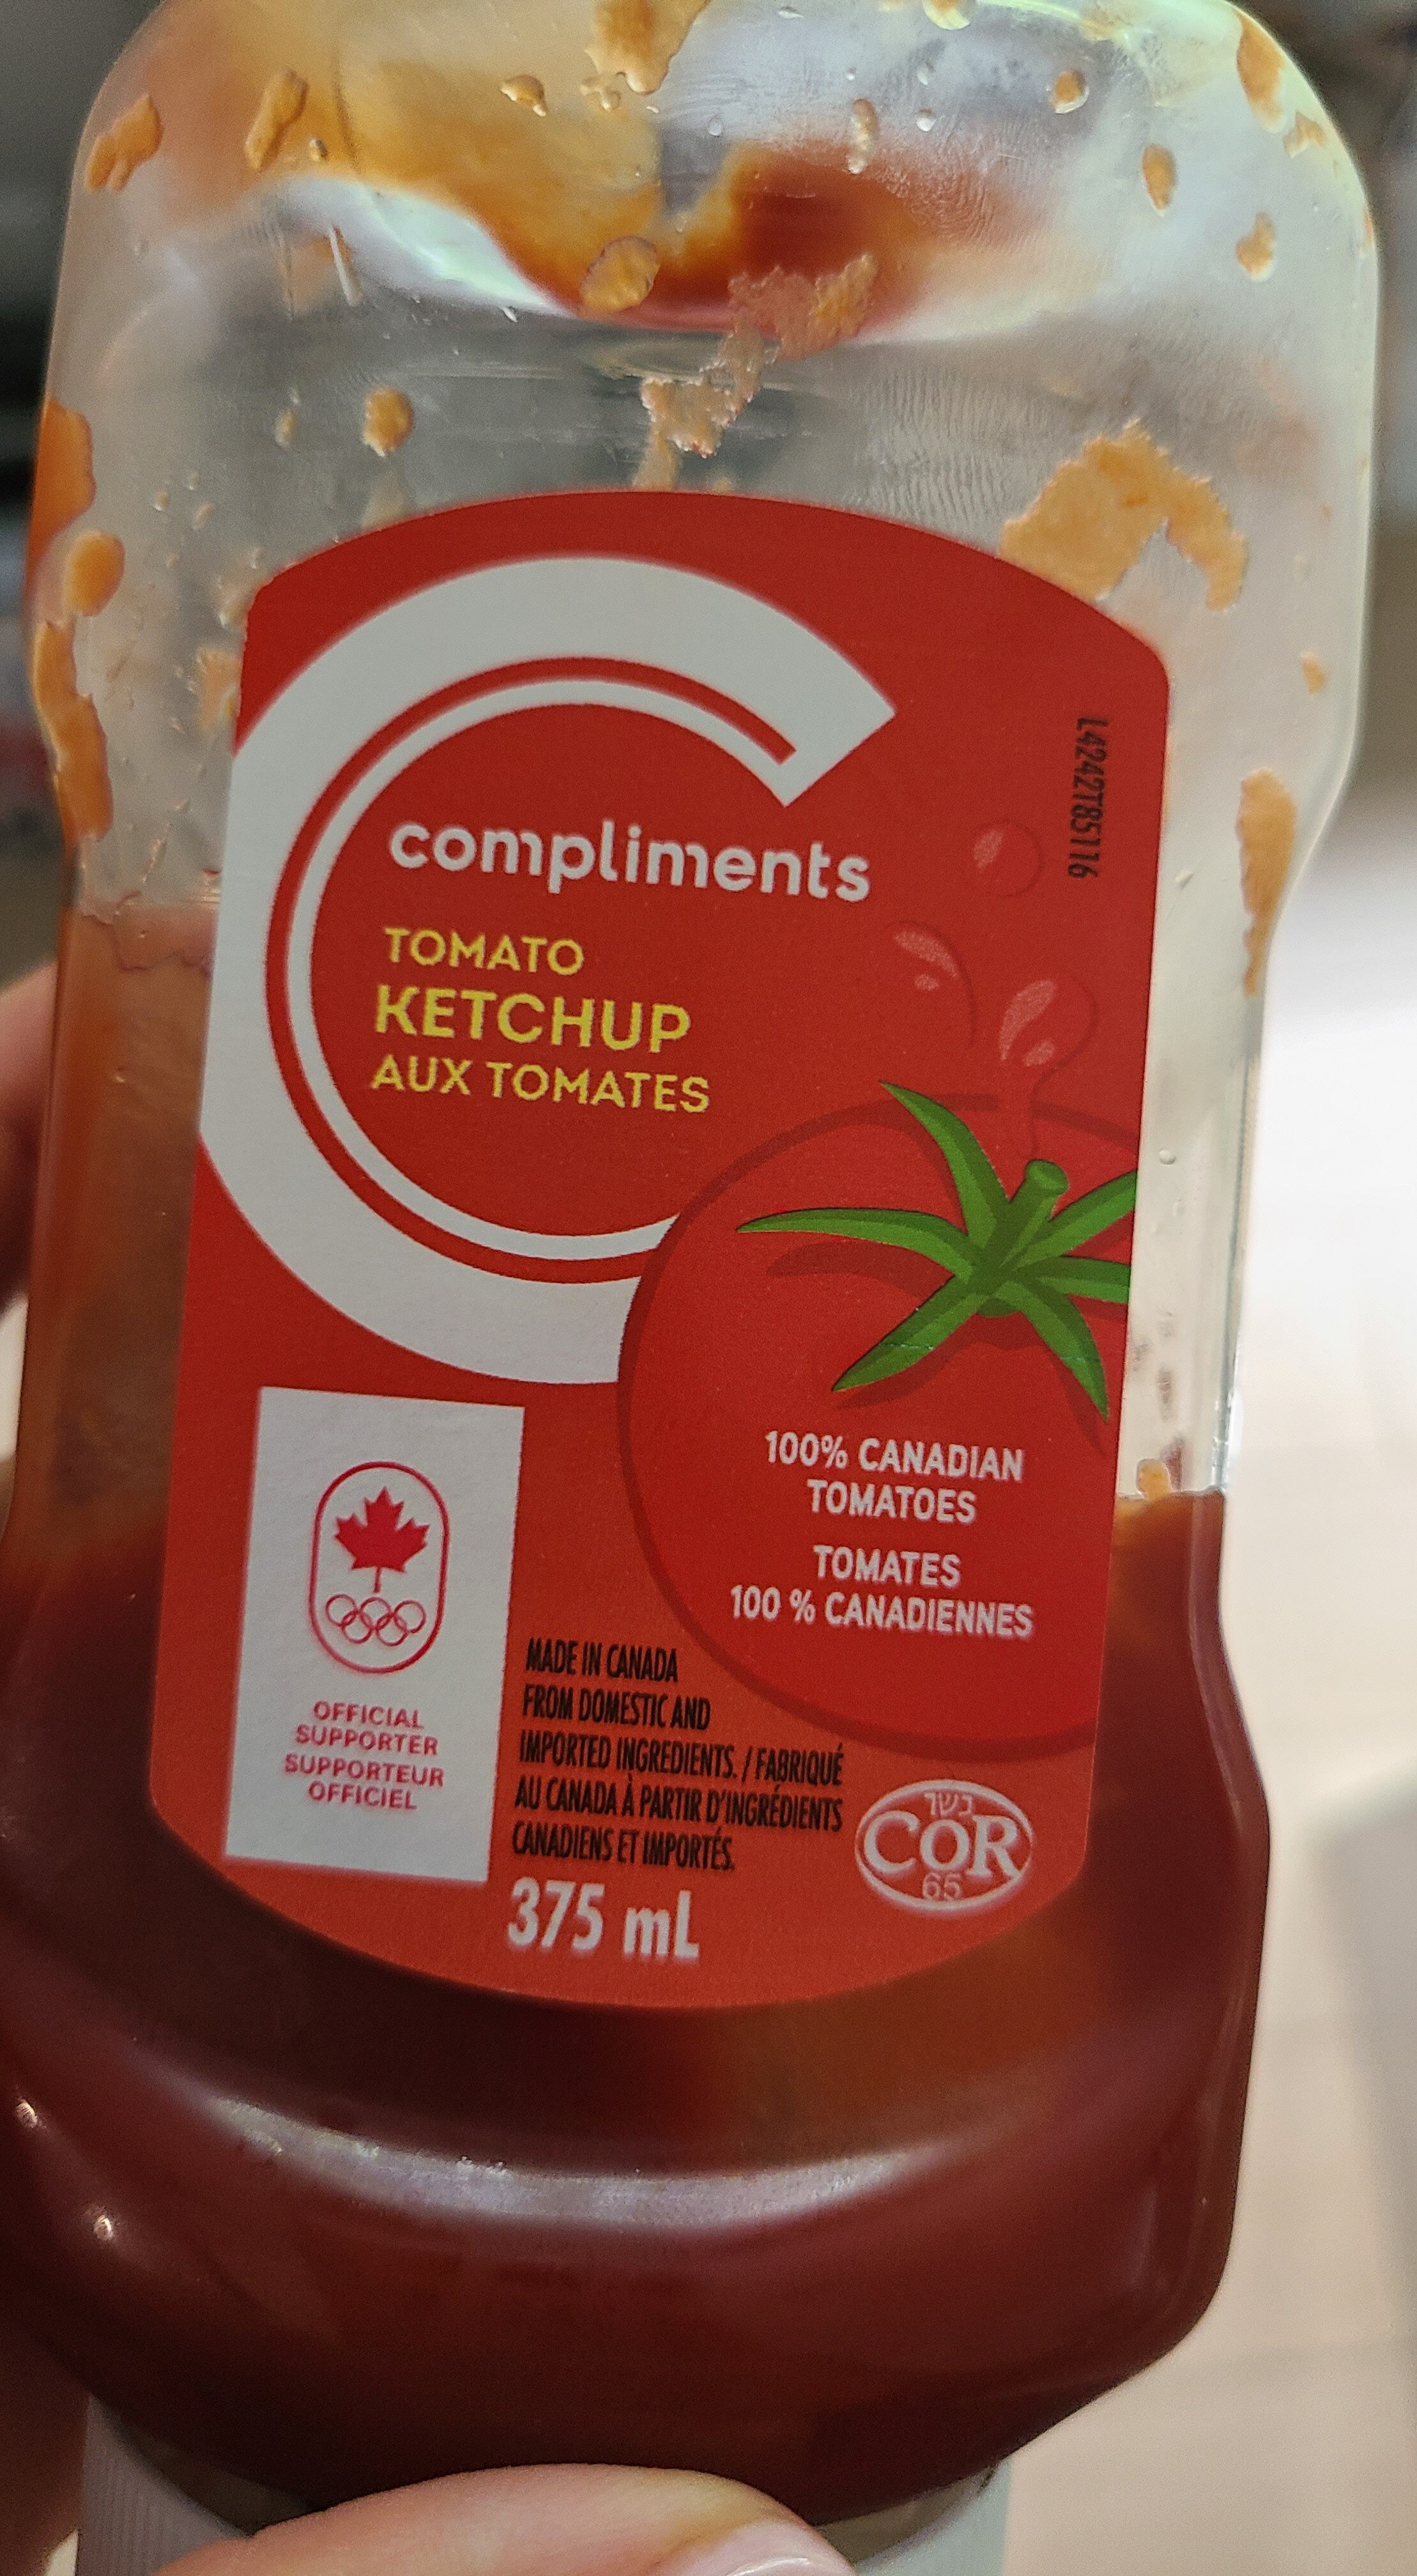 Tomato Ketchup - Product - en